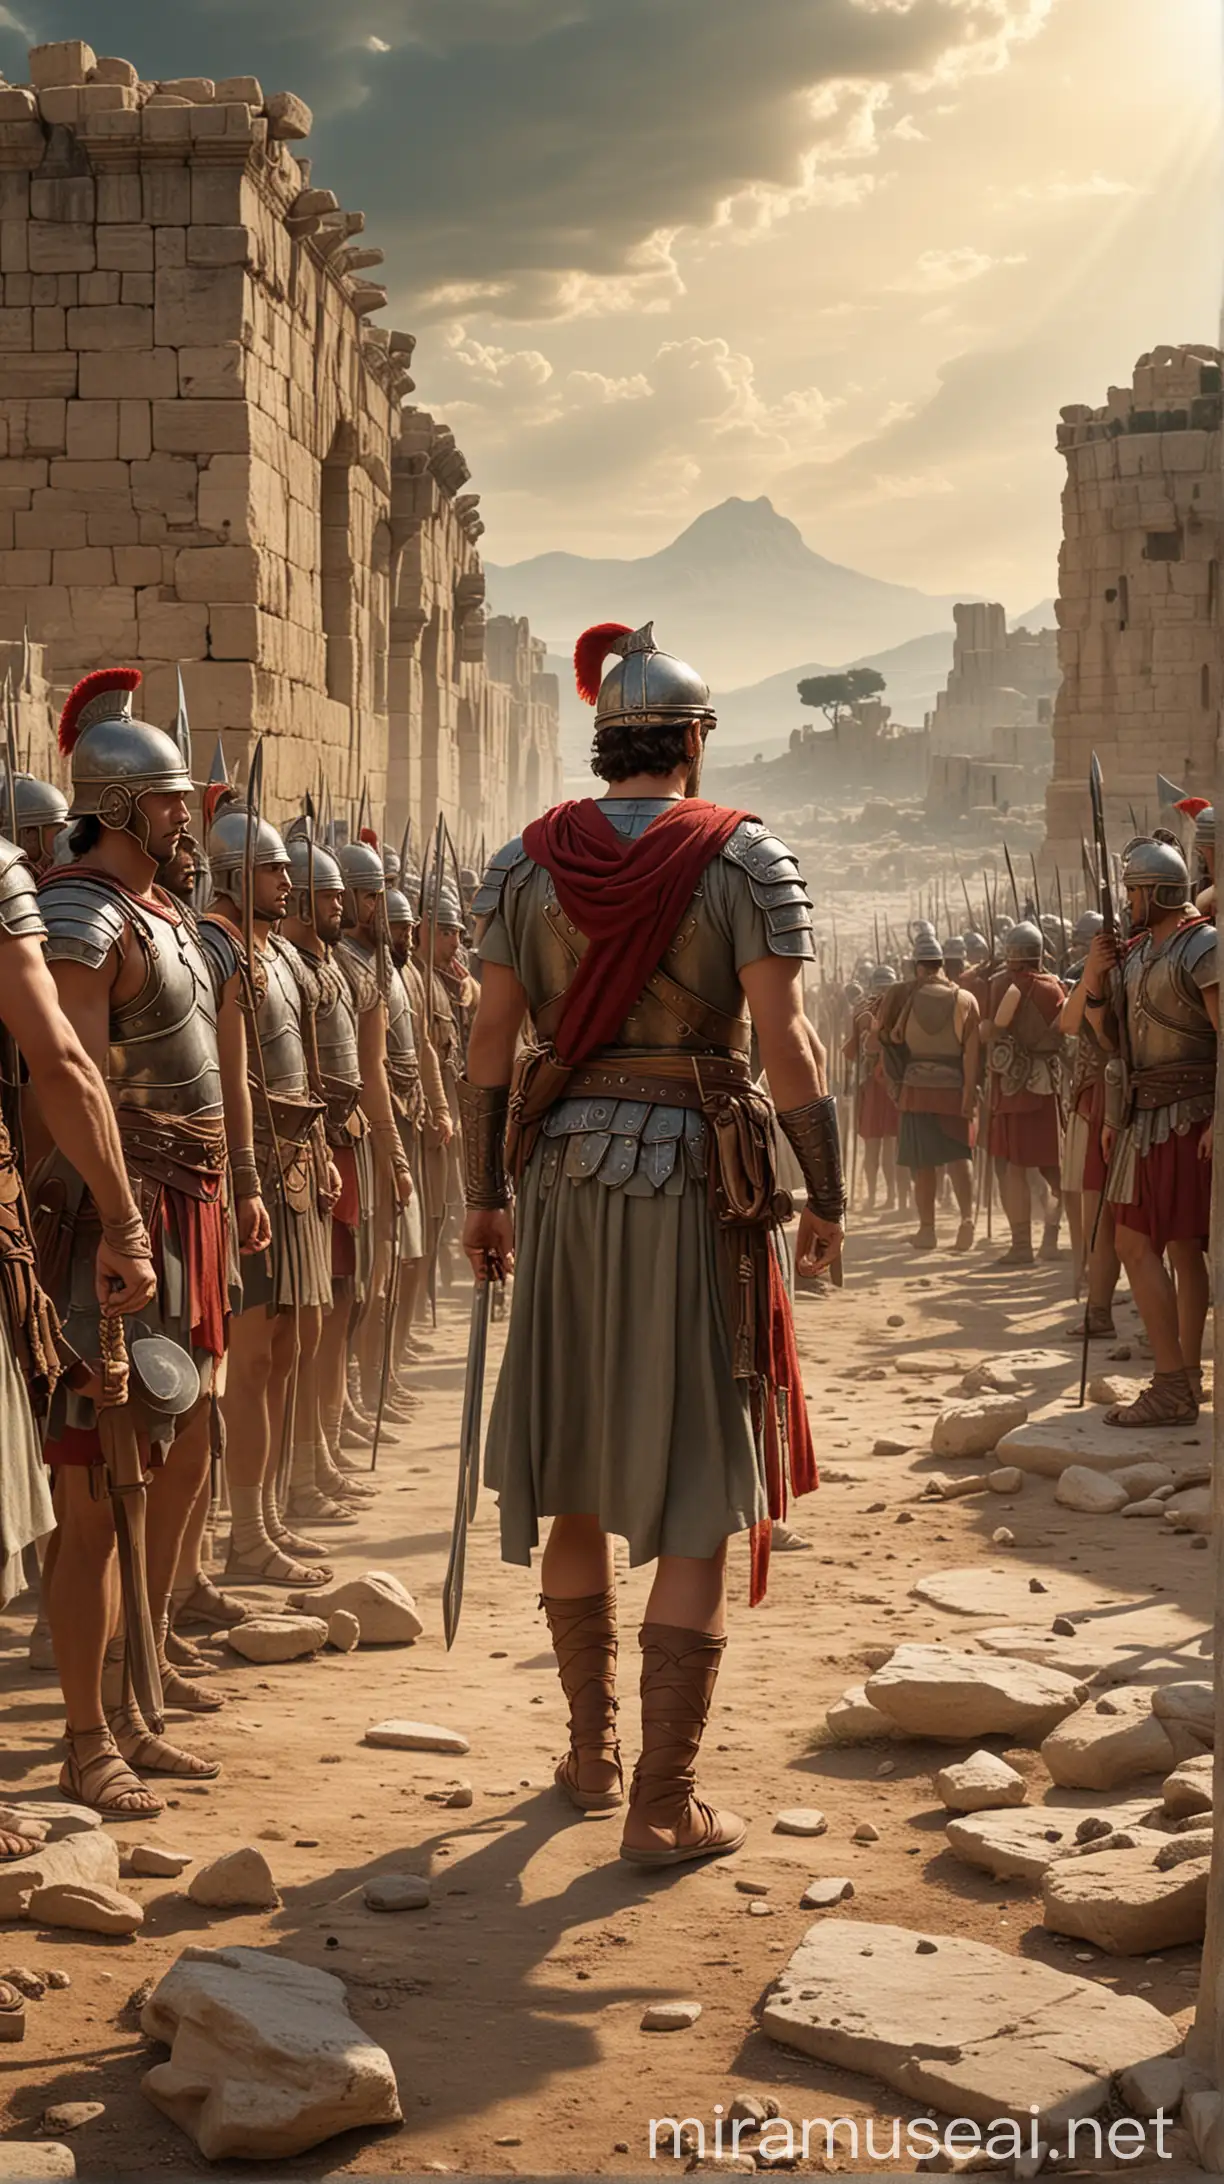 Troop Formation in Ancient Battle Scene